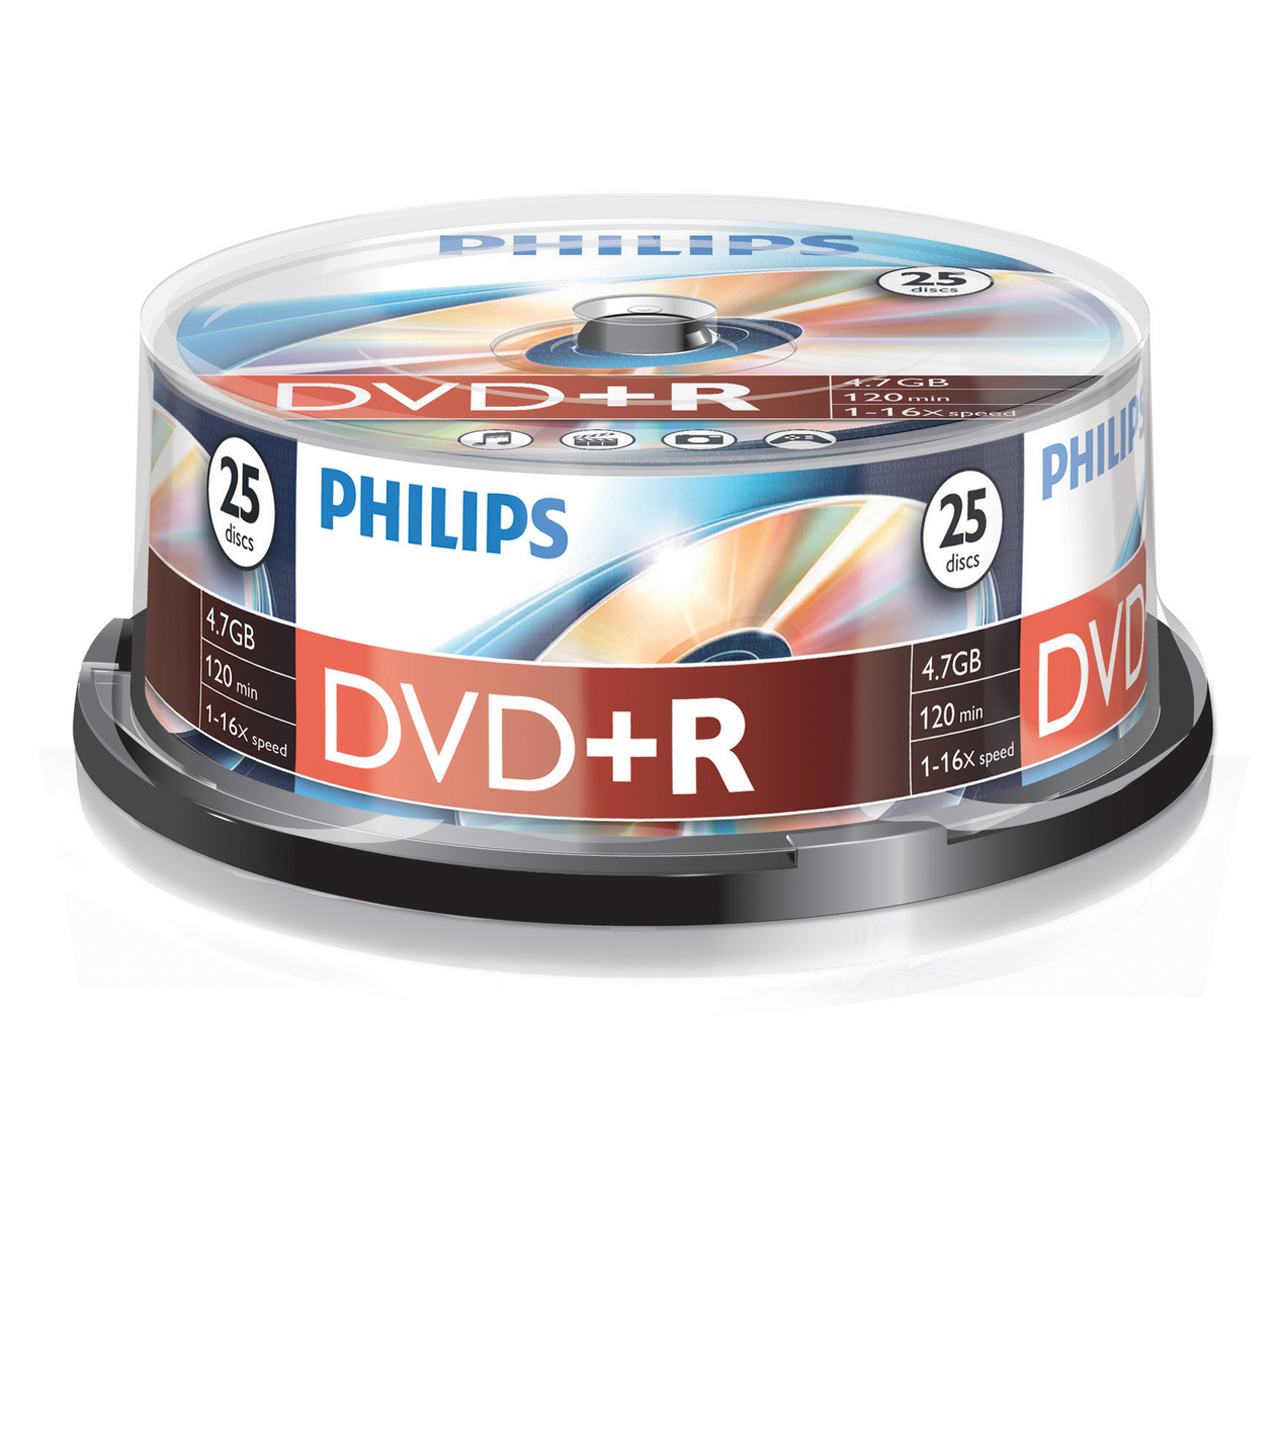 PHILIPS DVD+R Spindle 4.7GB 5212 25 Pcs 25 Pcs